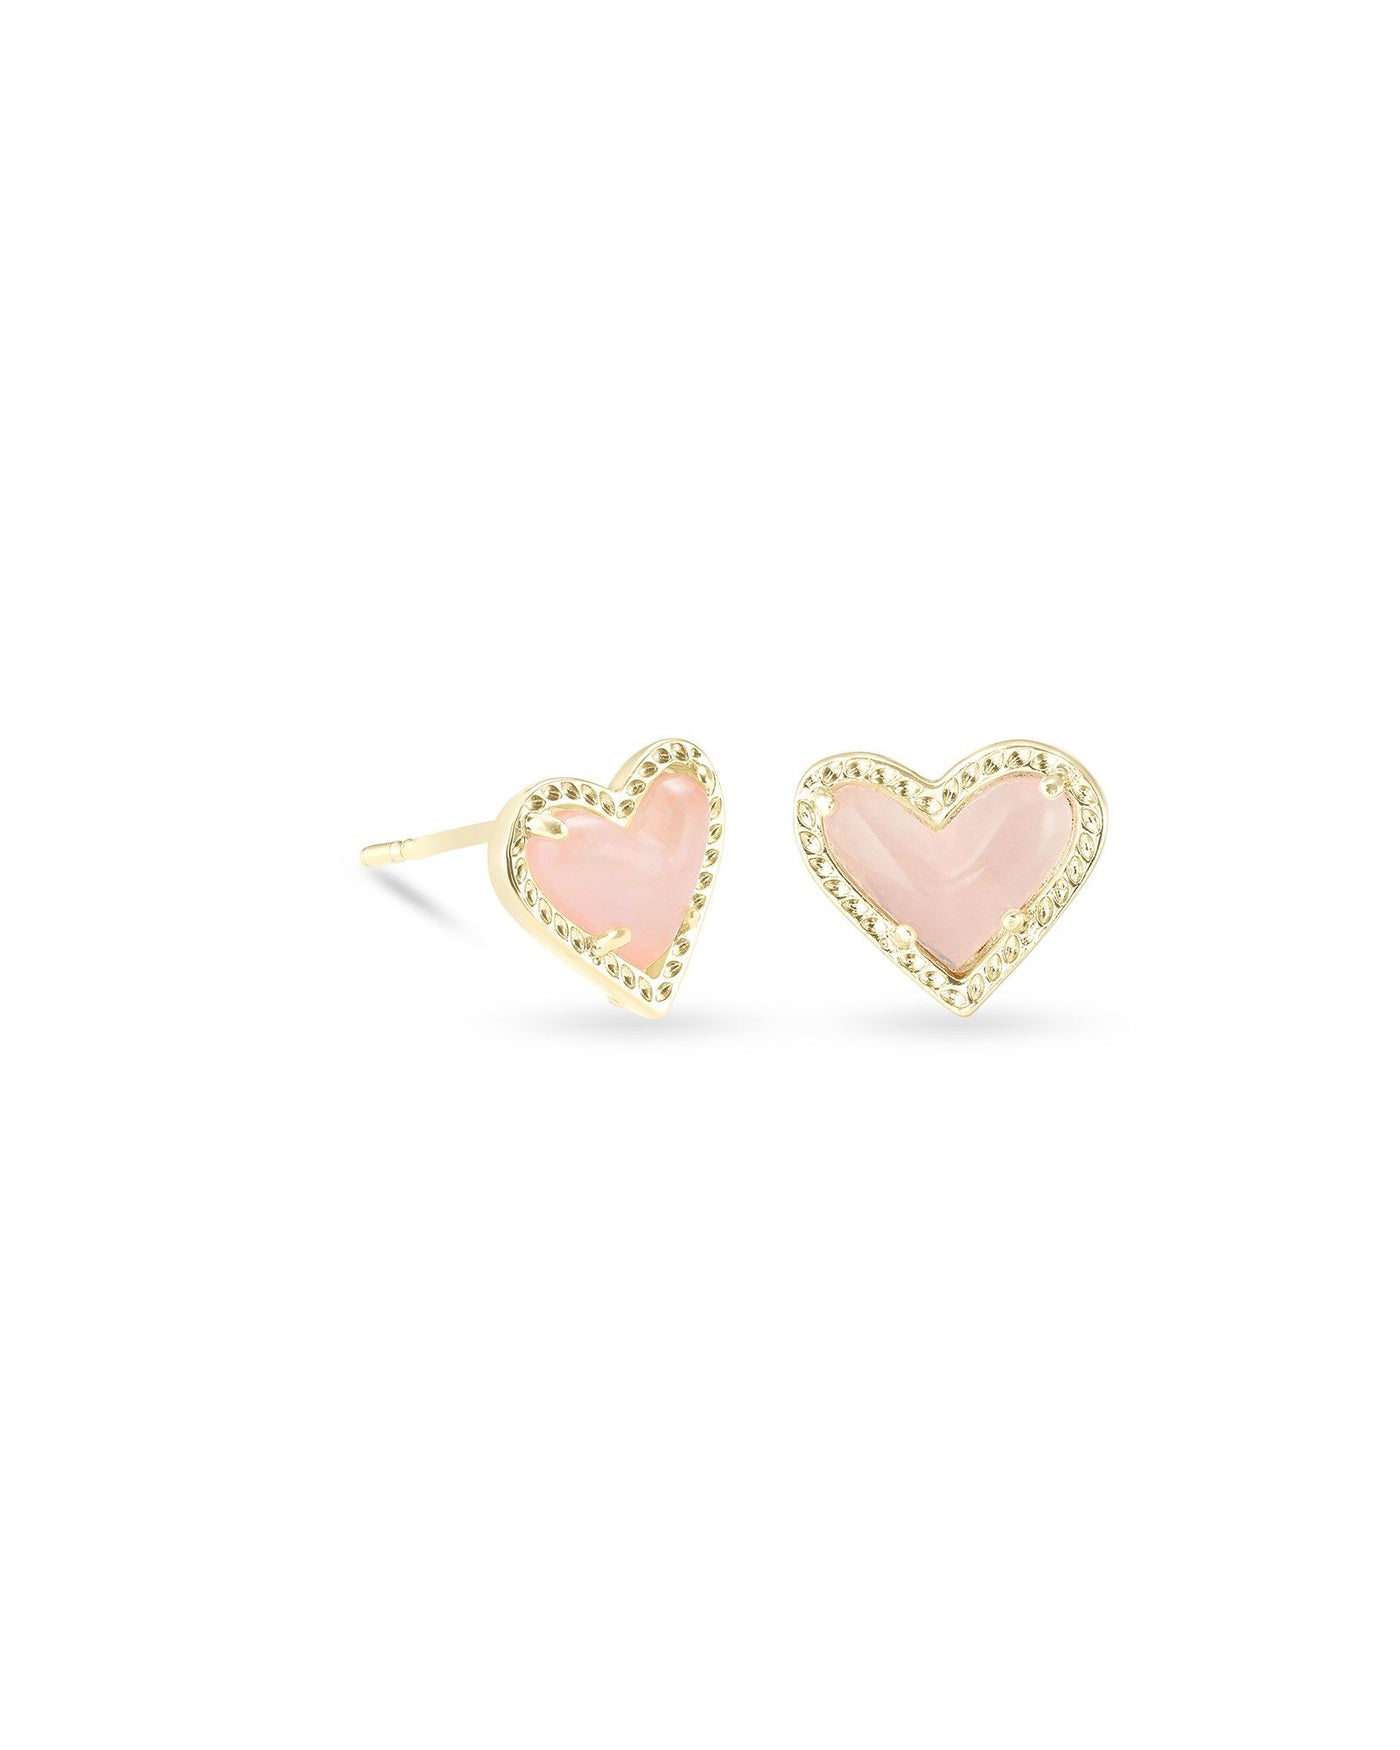 Ari Heart Stud Earrings Gold Rose Quartz on white background, front view.